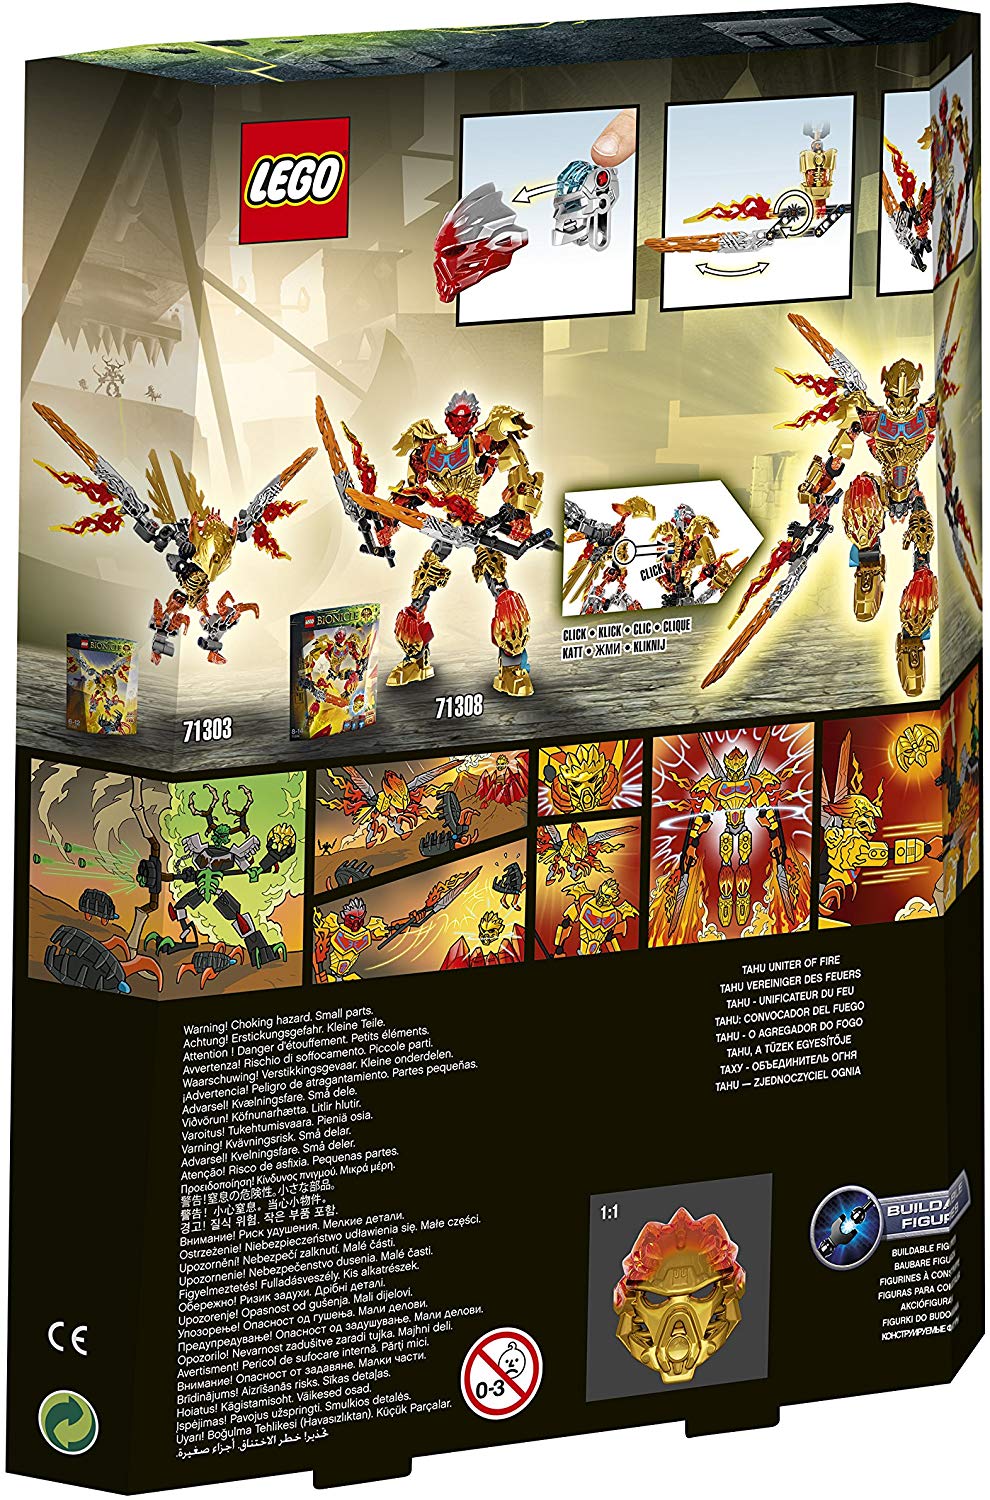 Lego Bionicle 71308: Tahu Uniter Of Fire  Mixed